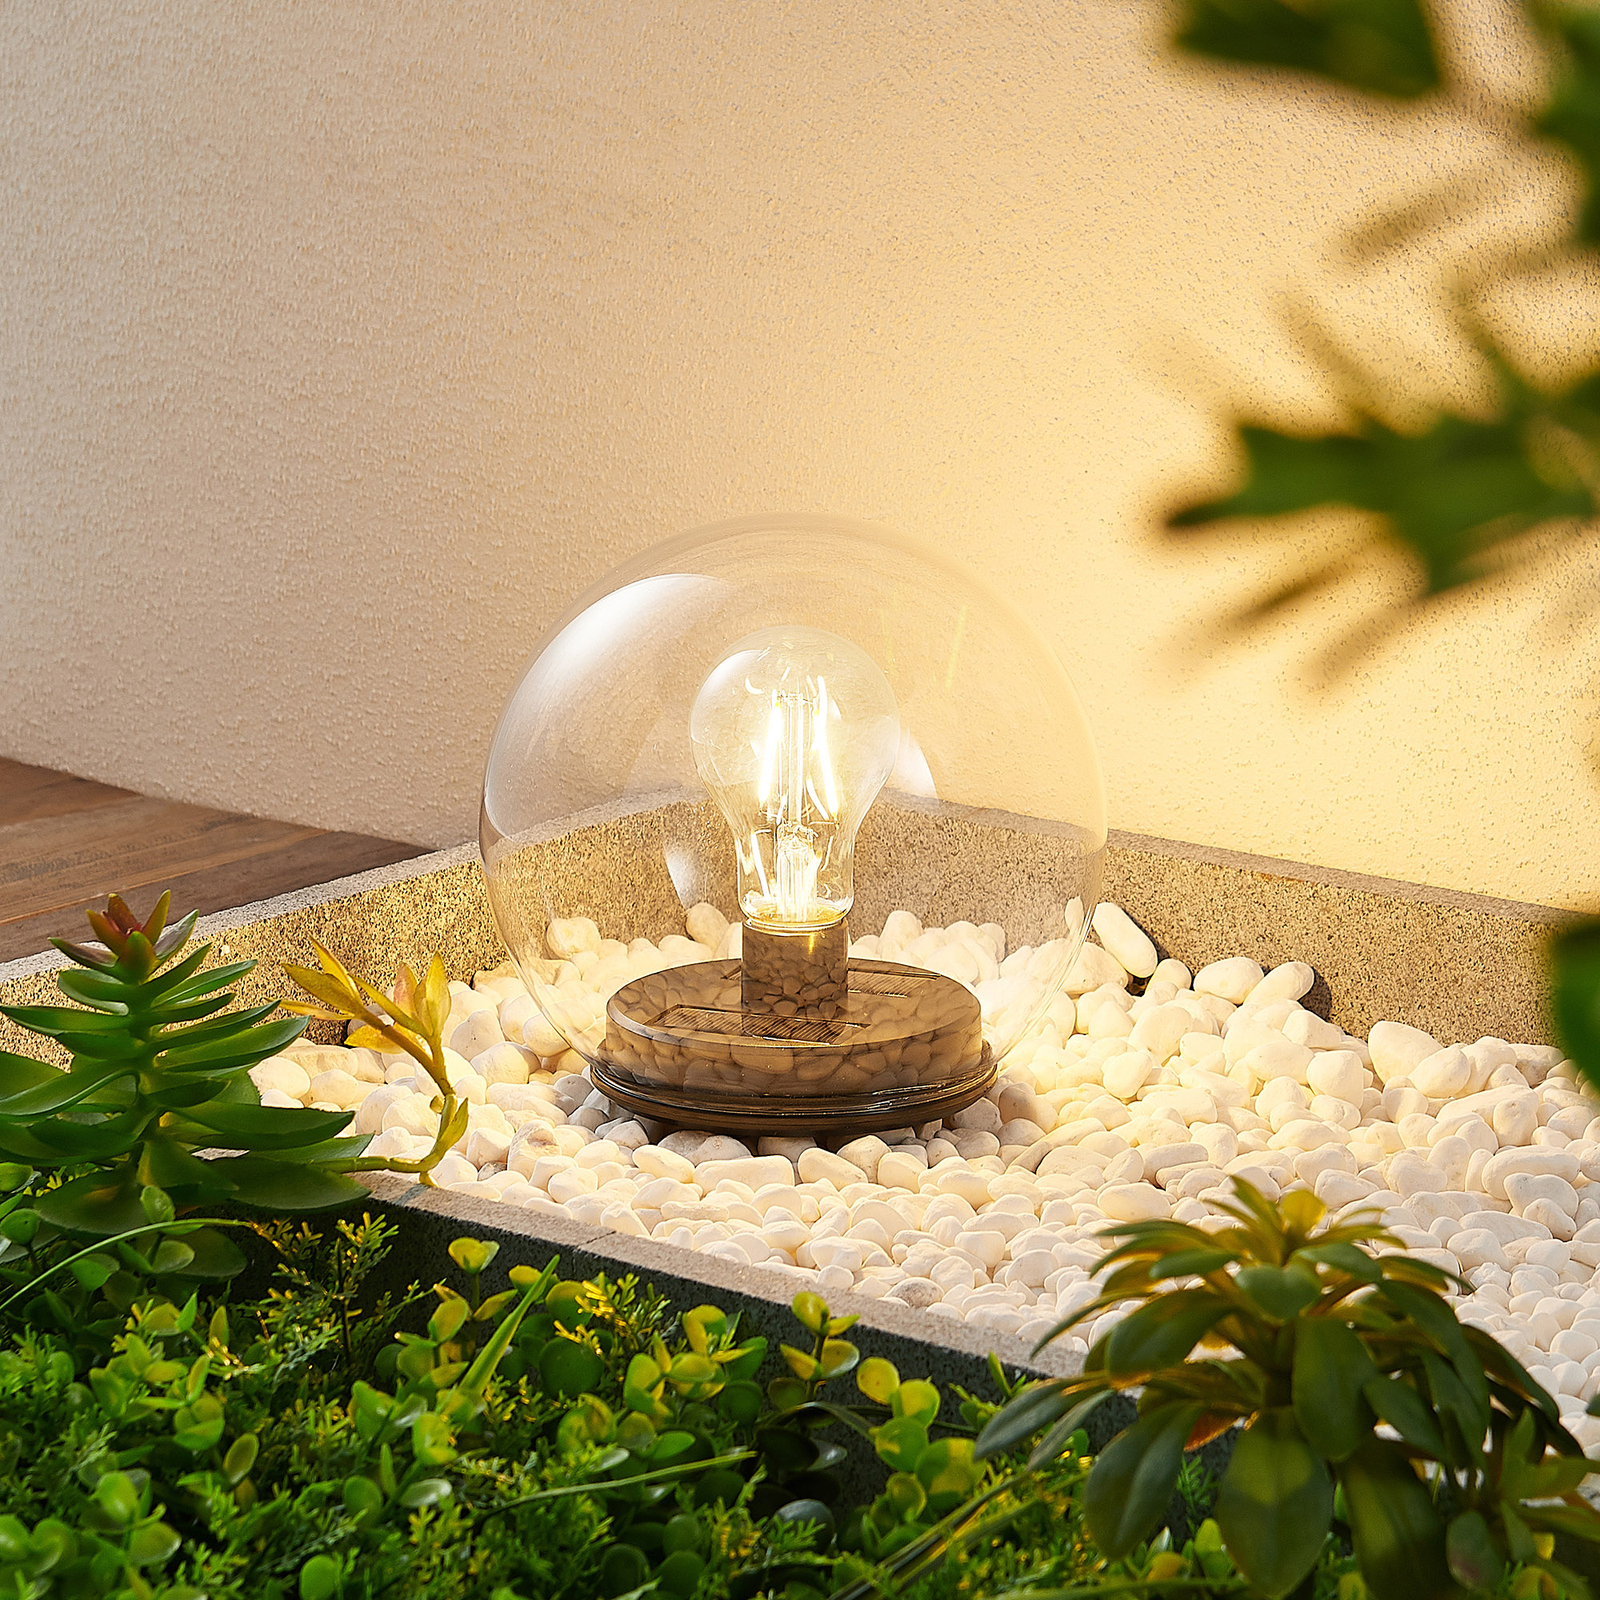 Lindby Roana lampe solaire LED jardin et table